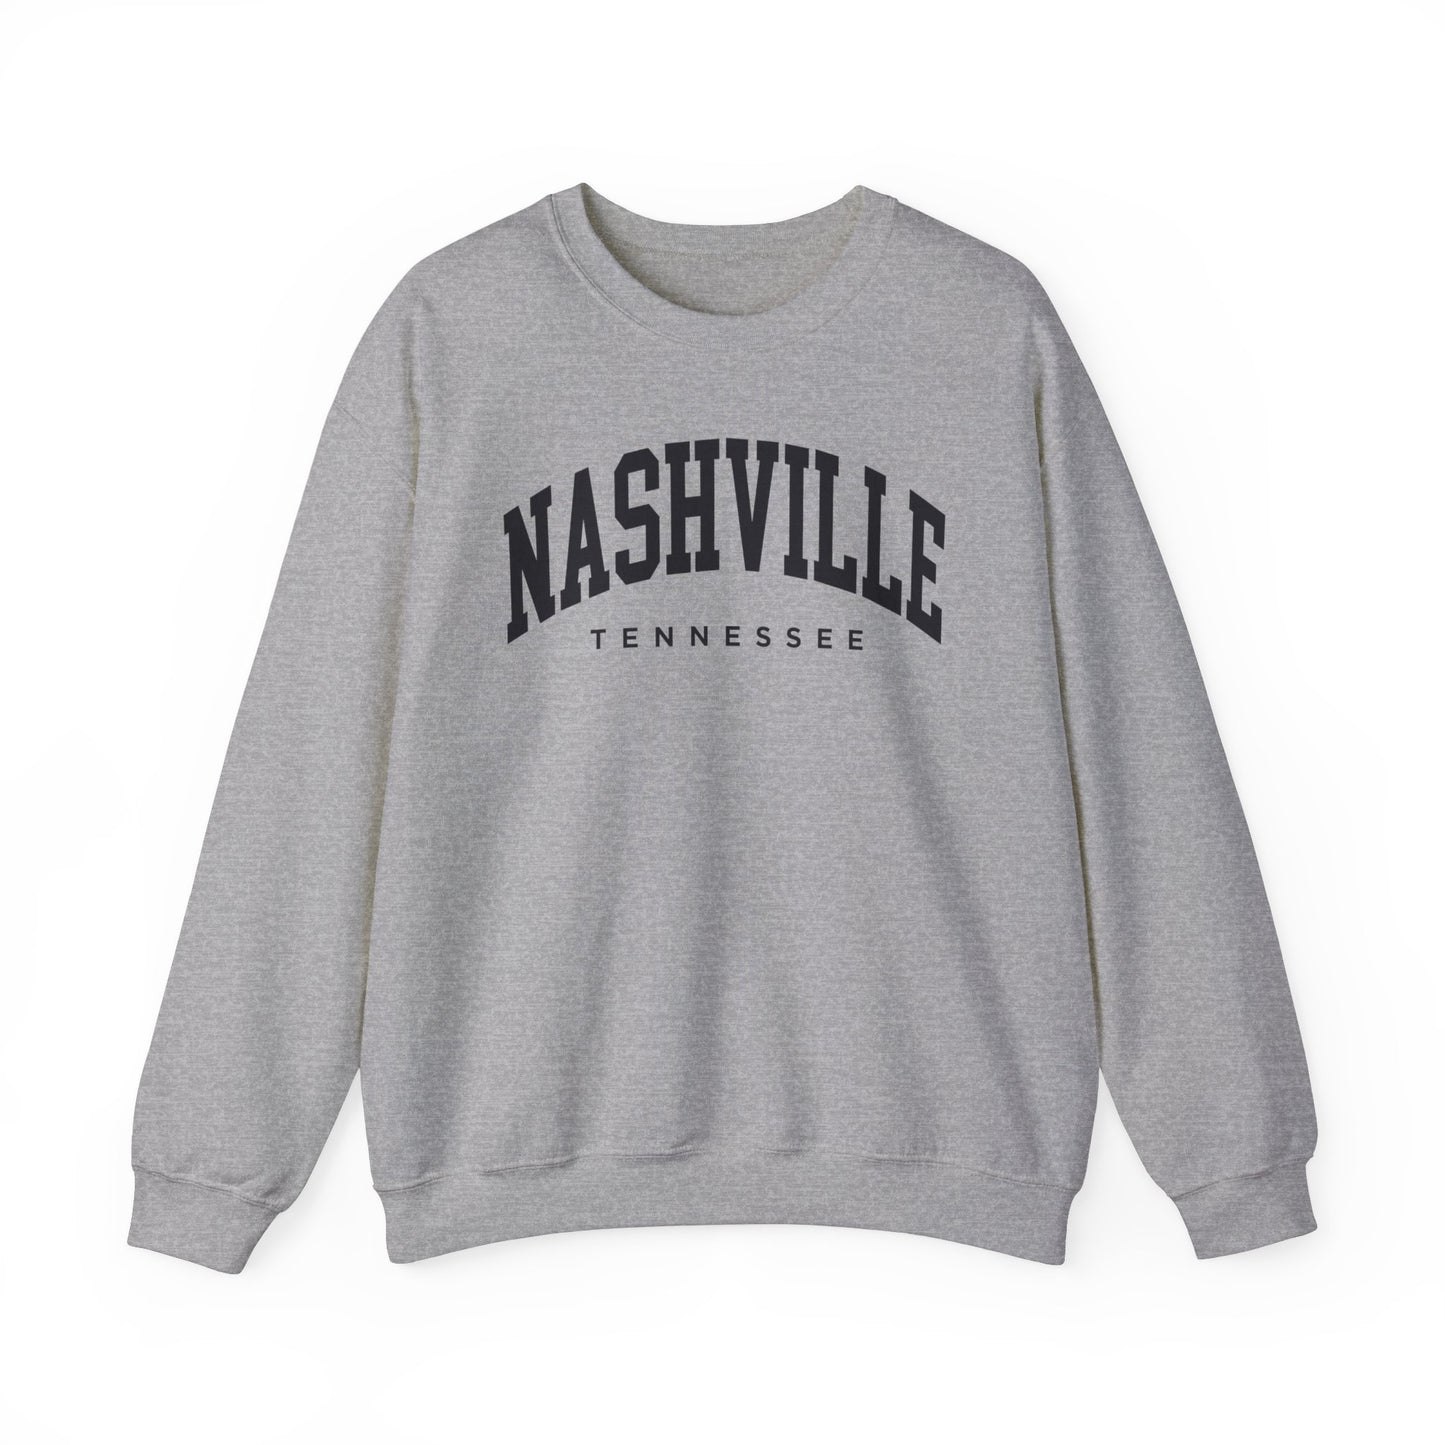 Nashville Tennessee Sweatshirt